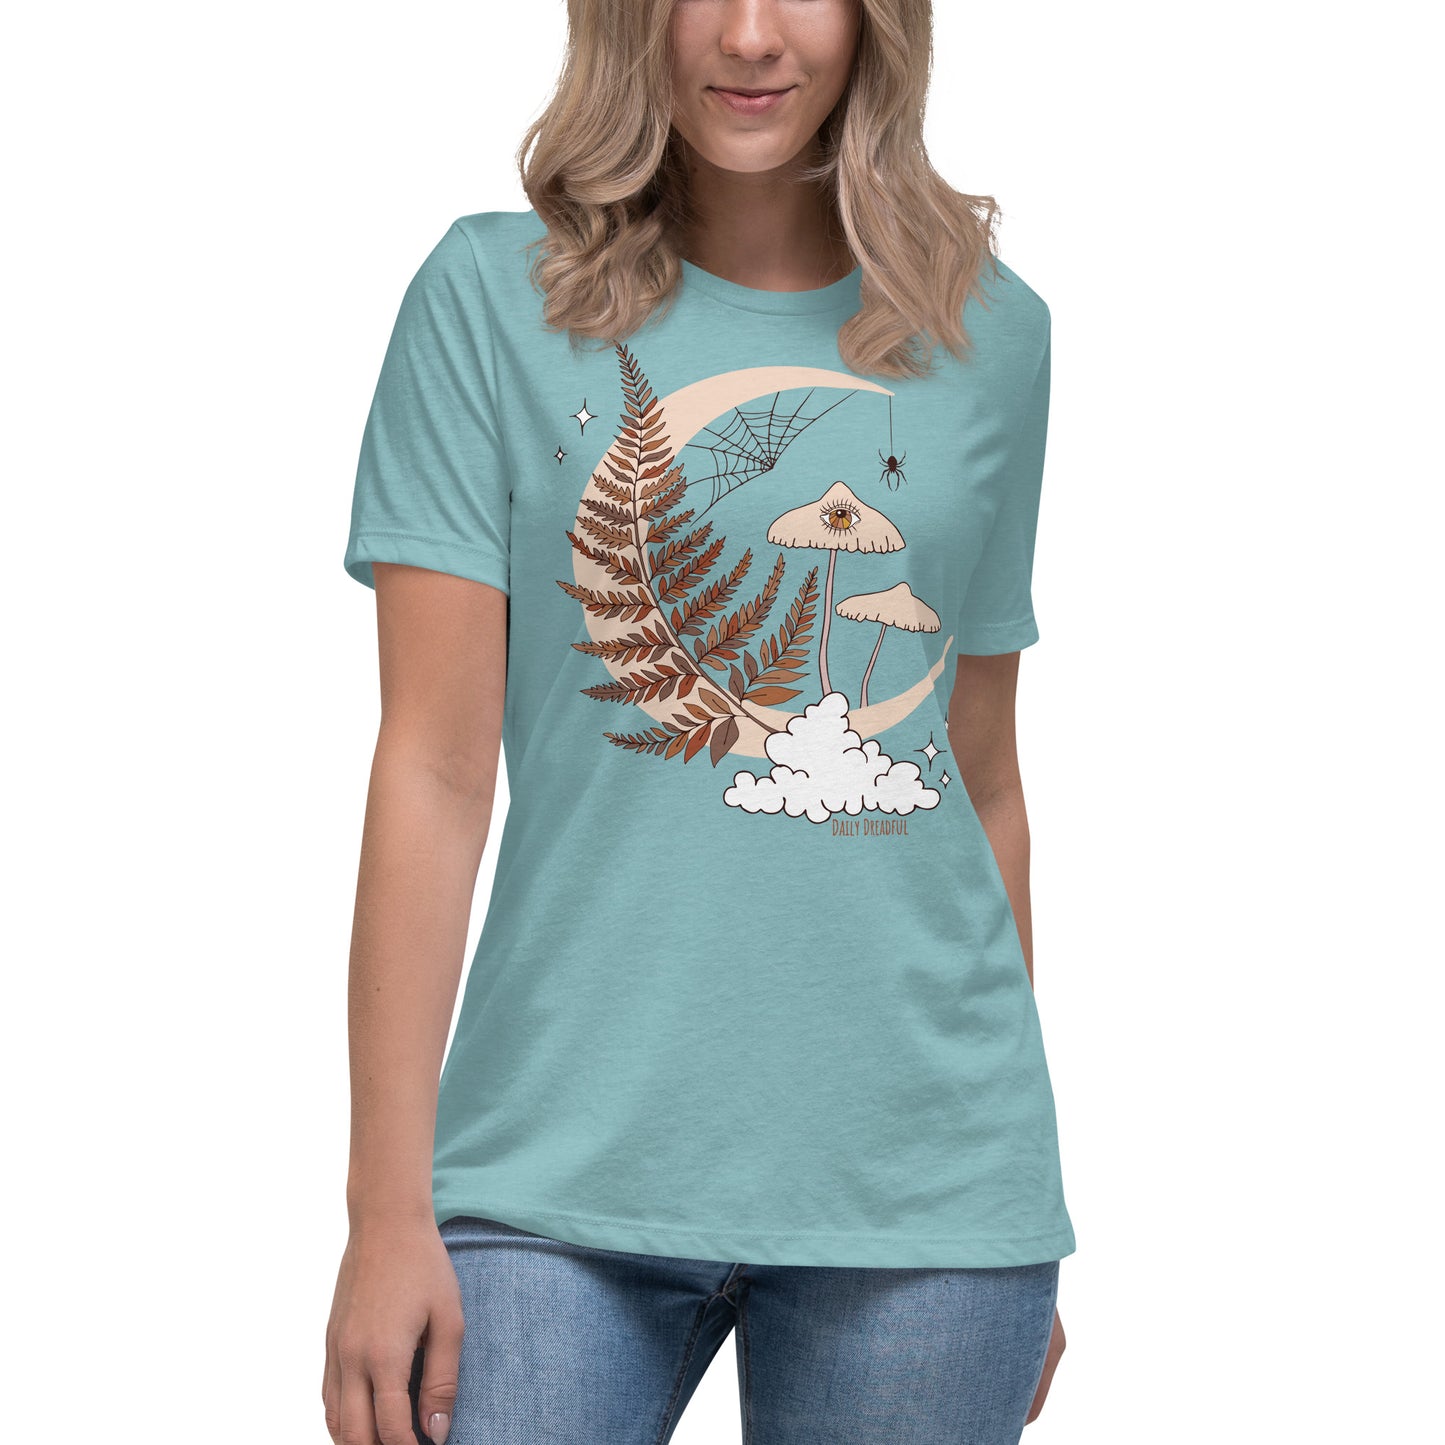 "Magic Mushroom" relaxed t-shirt, heather blue lagoon colored tee